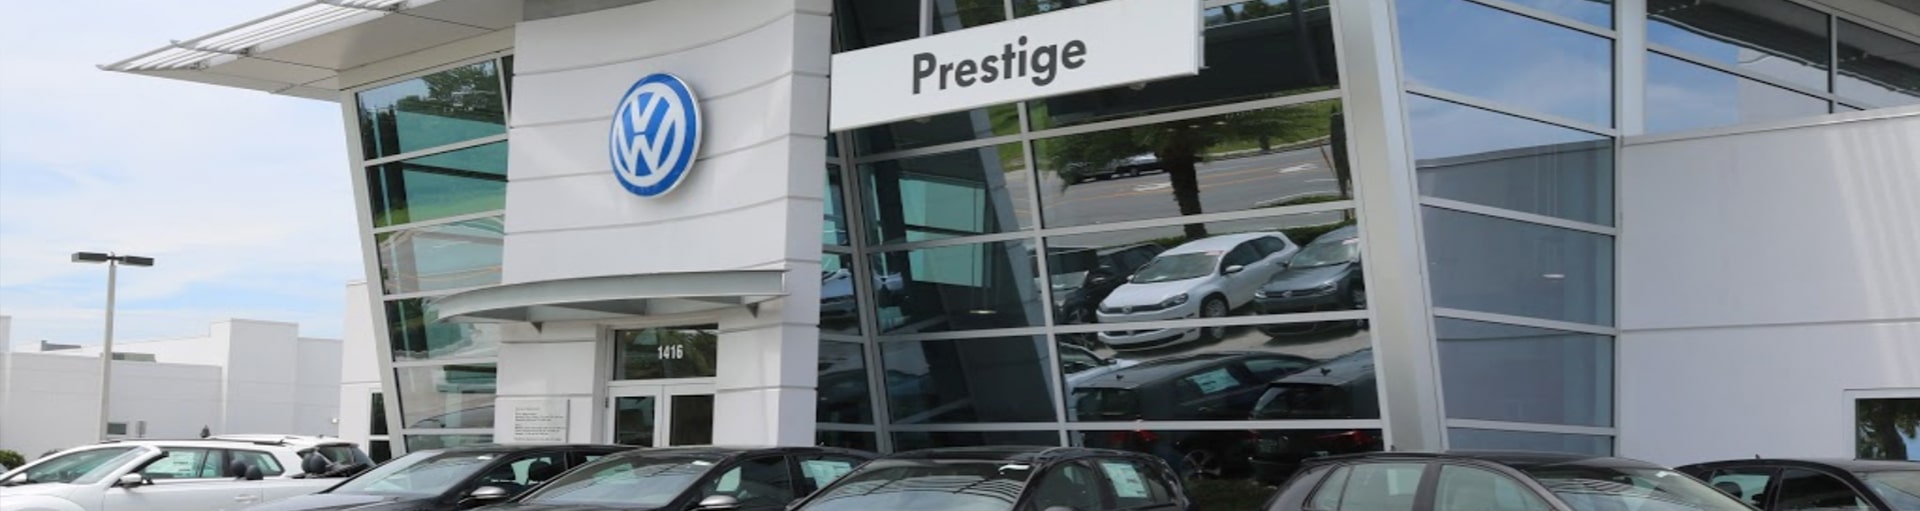 Prestige Volkswagen of Melbourne Summer Maintenance Tips